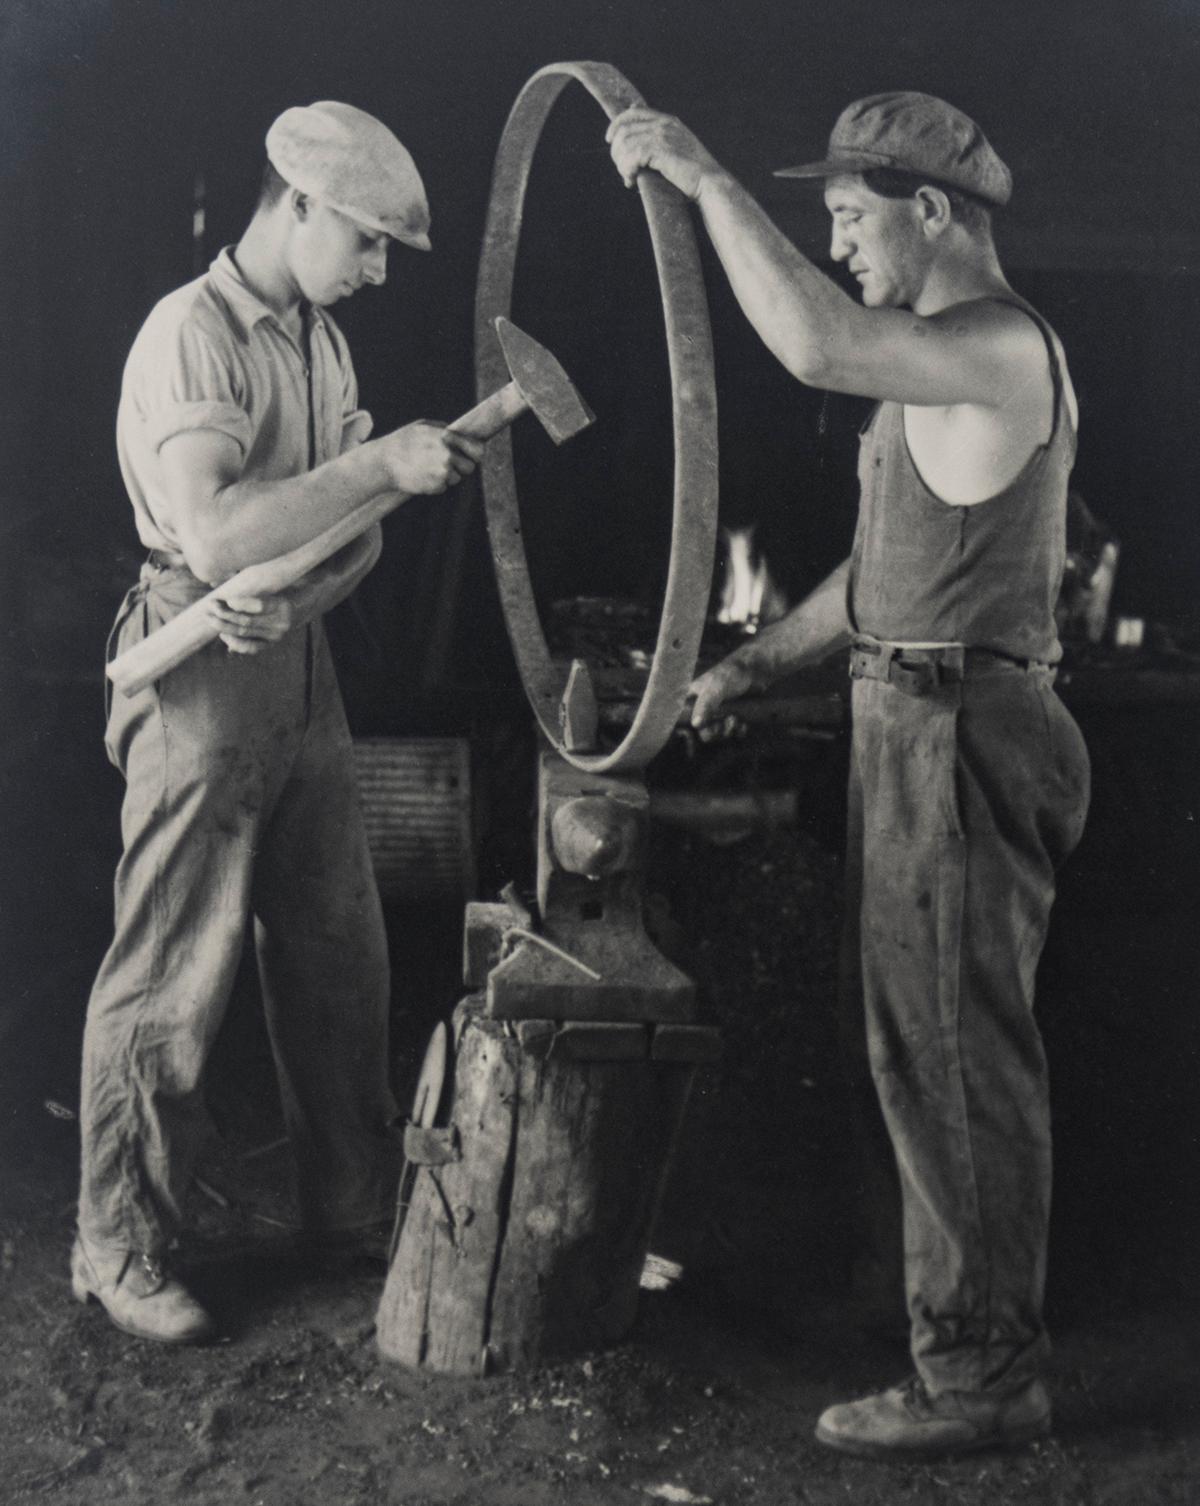 Alfons Himmelreich Black and White Photograph – Metallarbeiter aus Metall